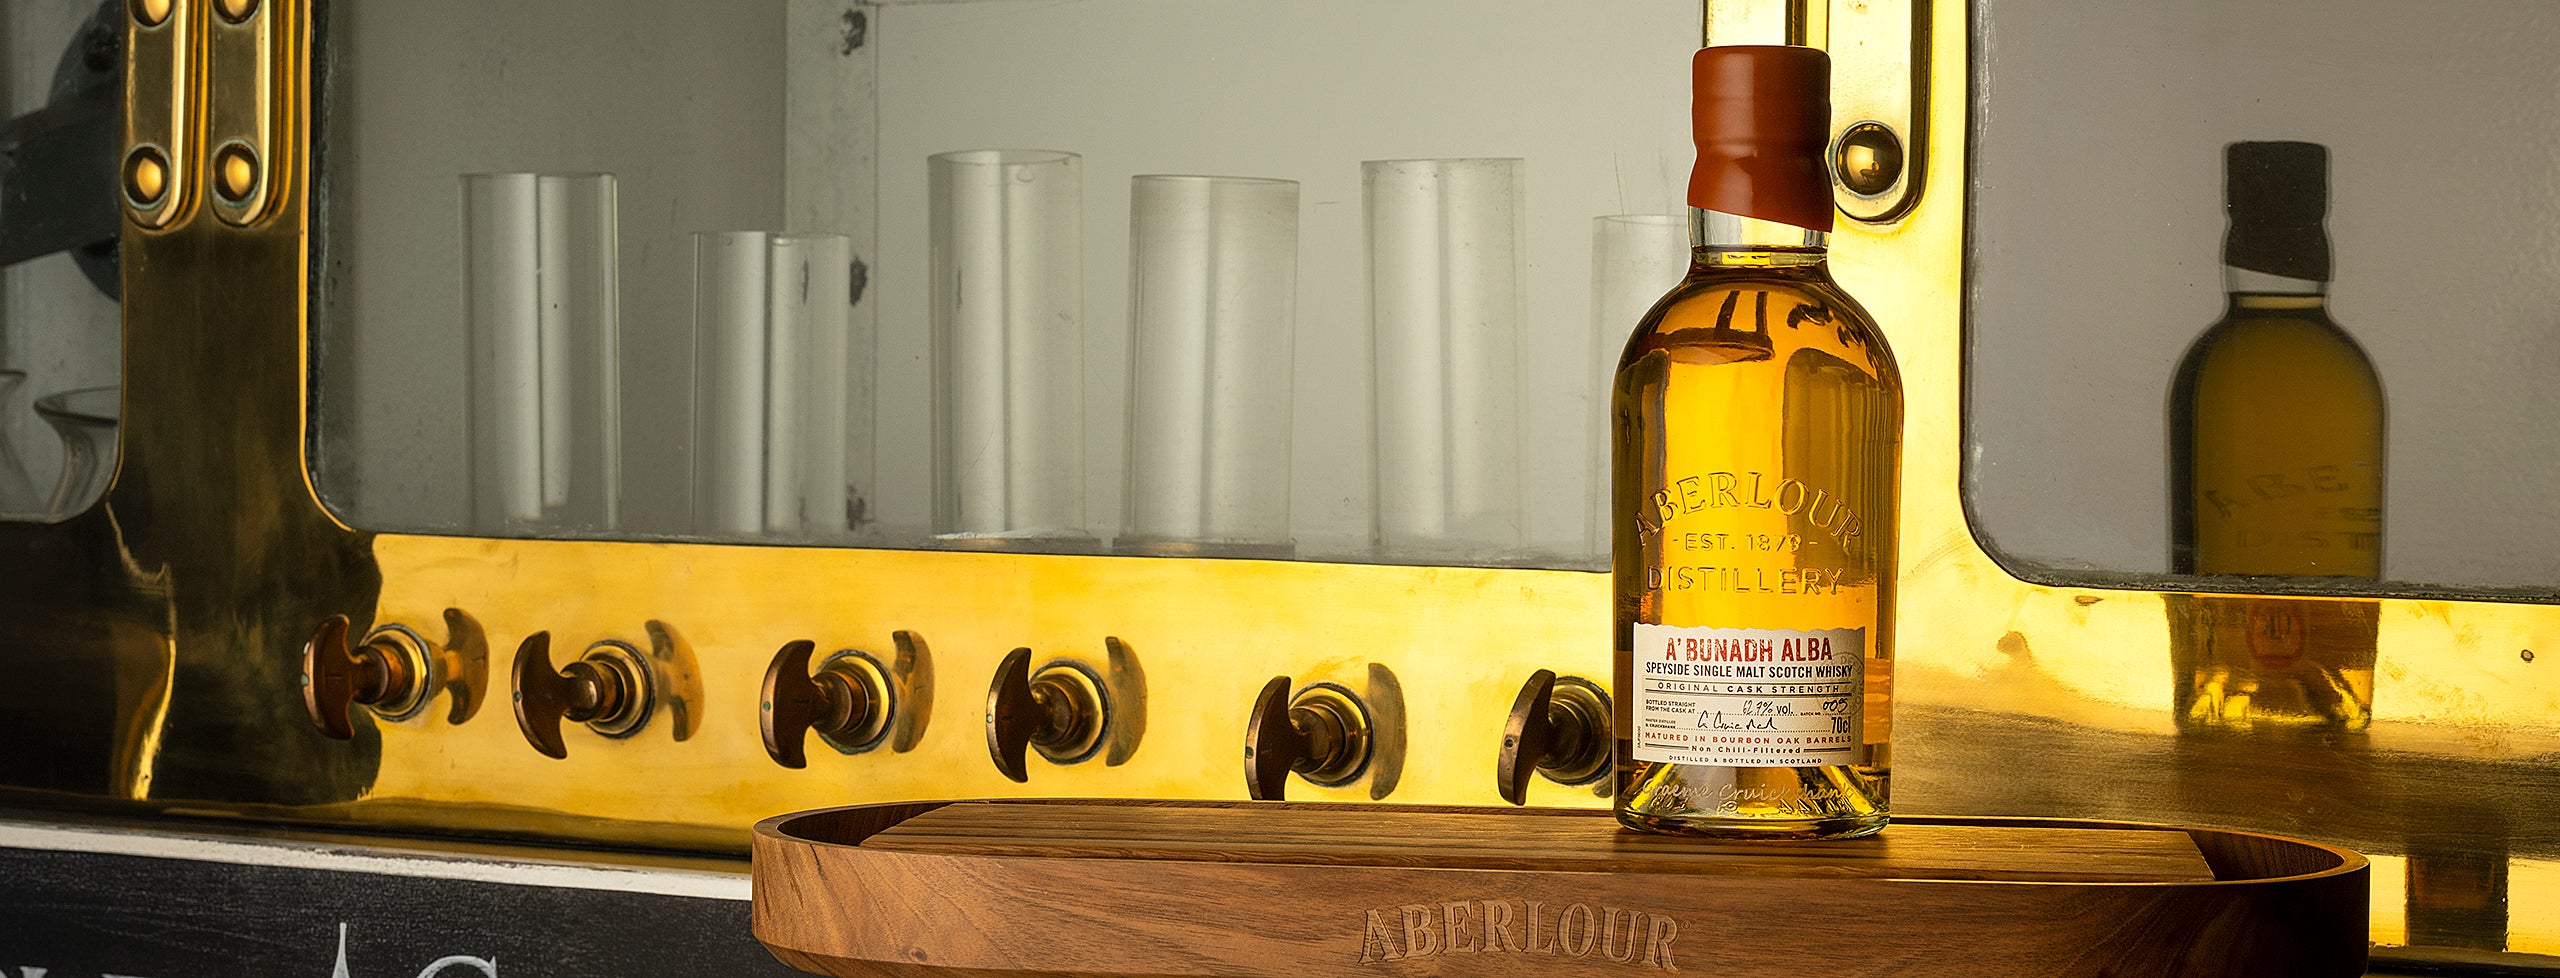 Aberlour A'Bunadh Alba Scotch Whisky